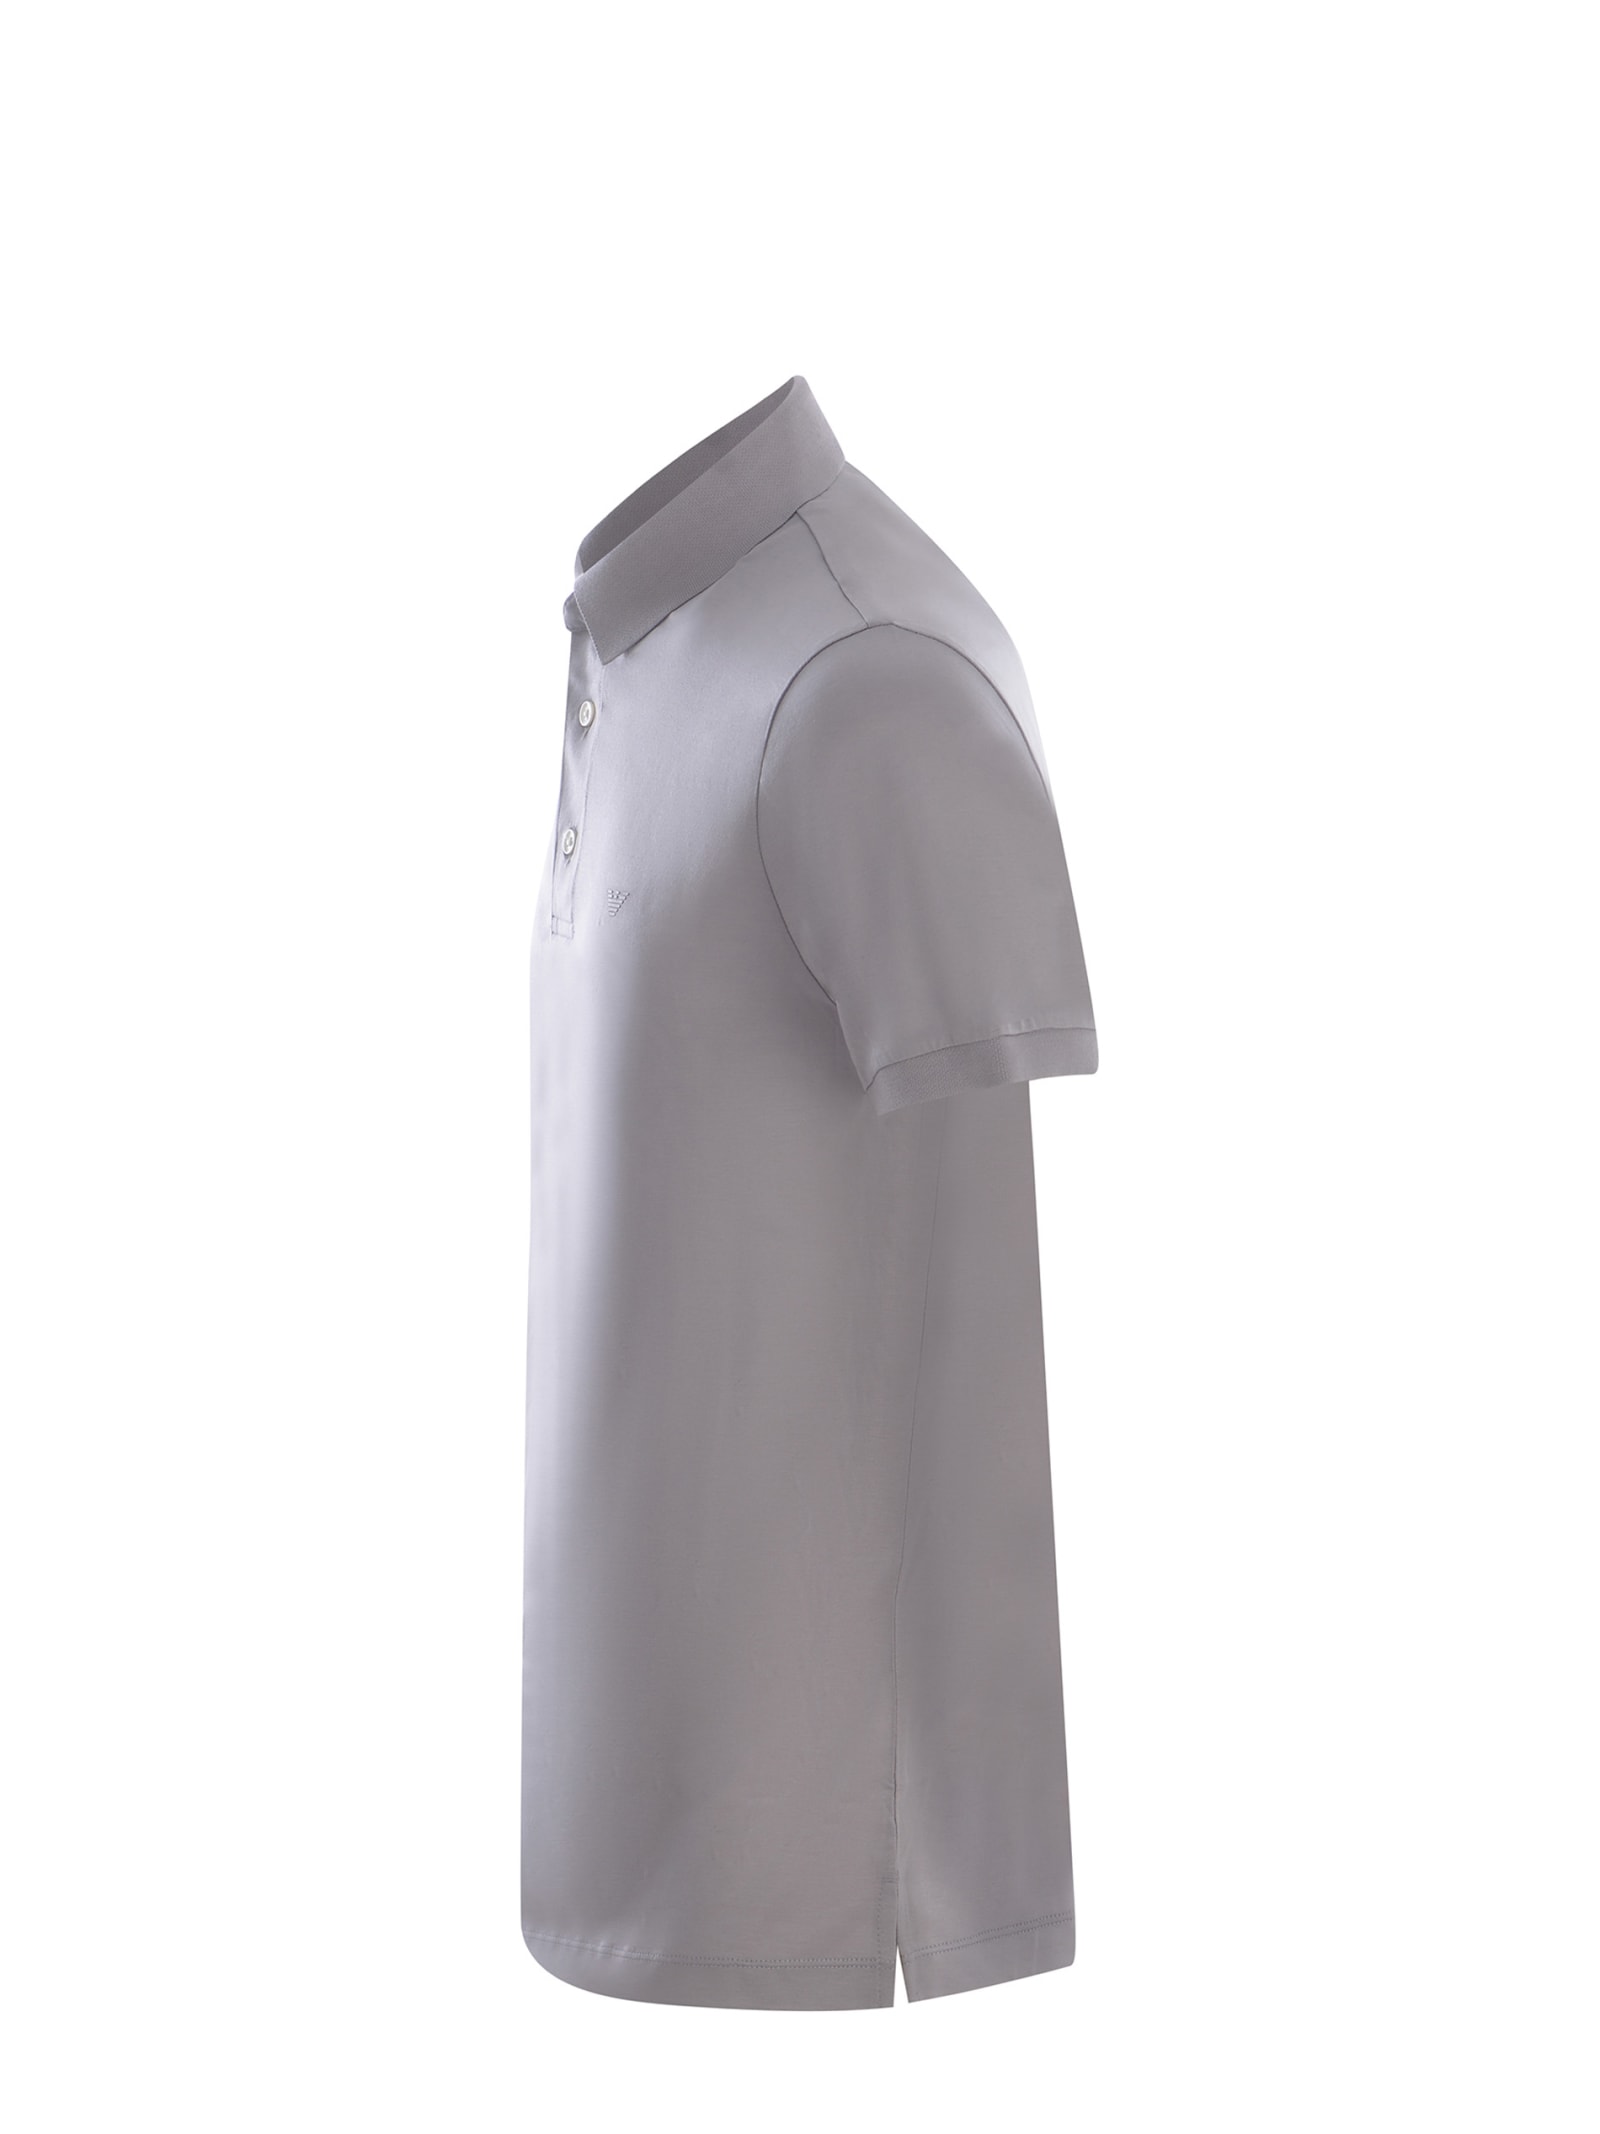 Shop Emporio Armani Polo Shirt  Made Of Jersey In Grey